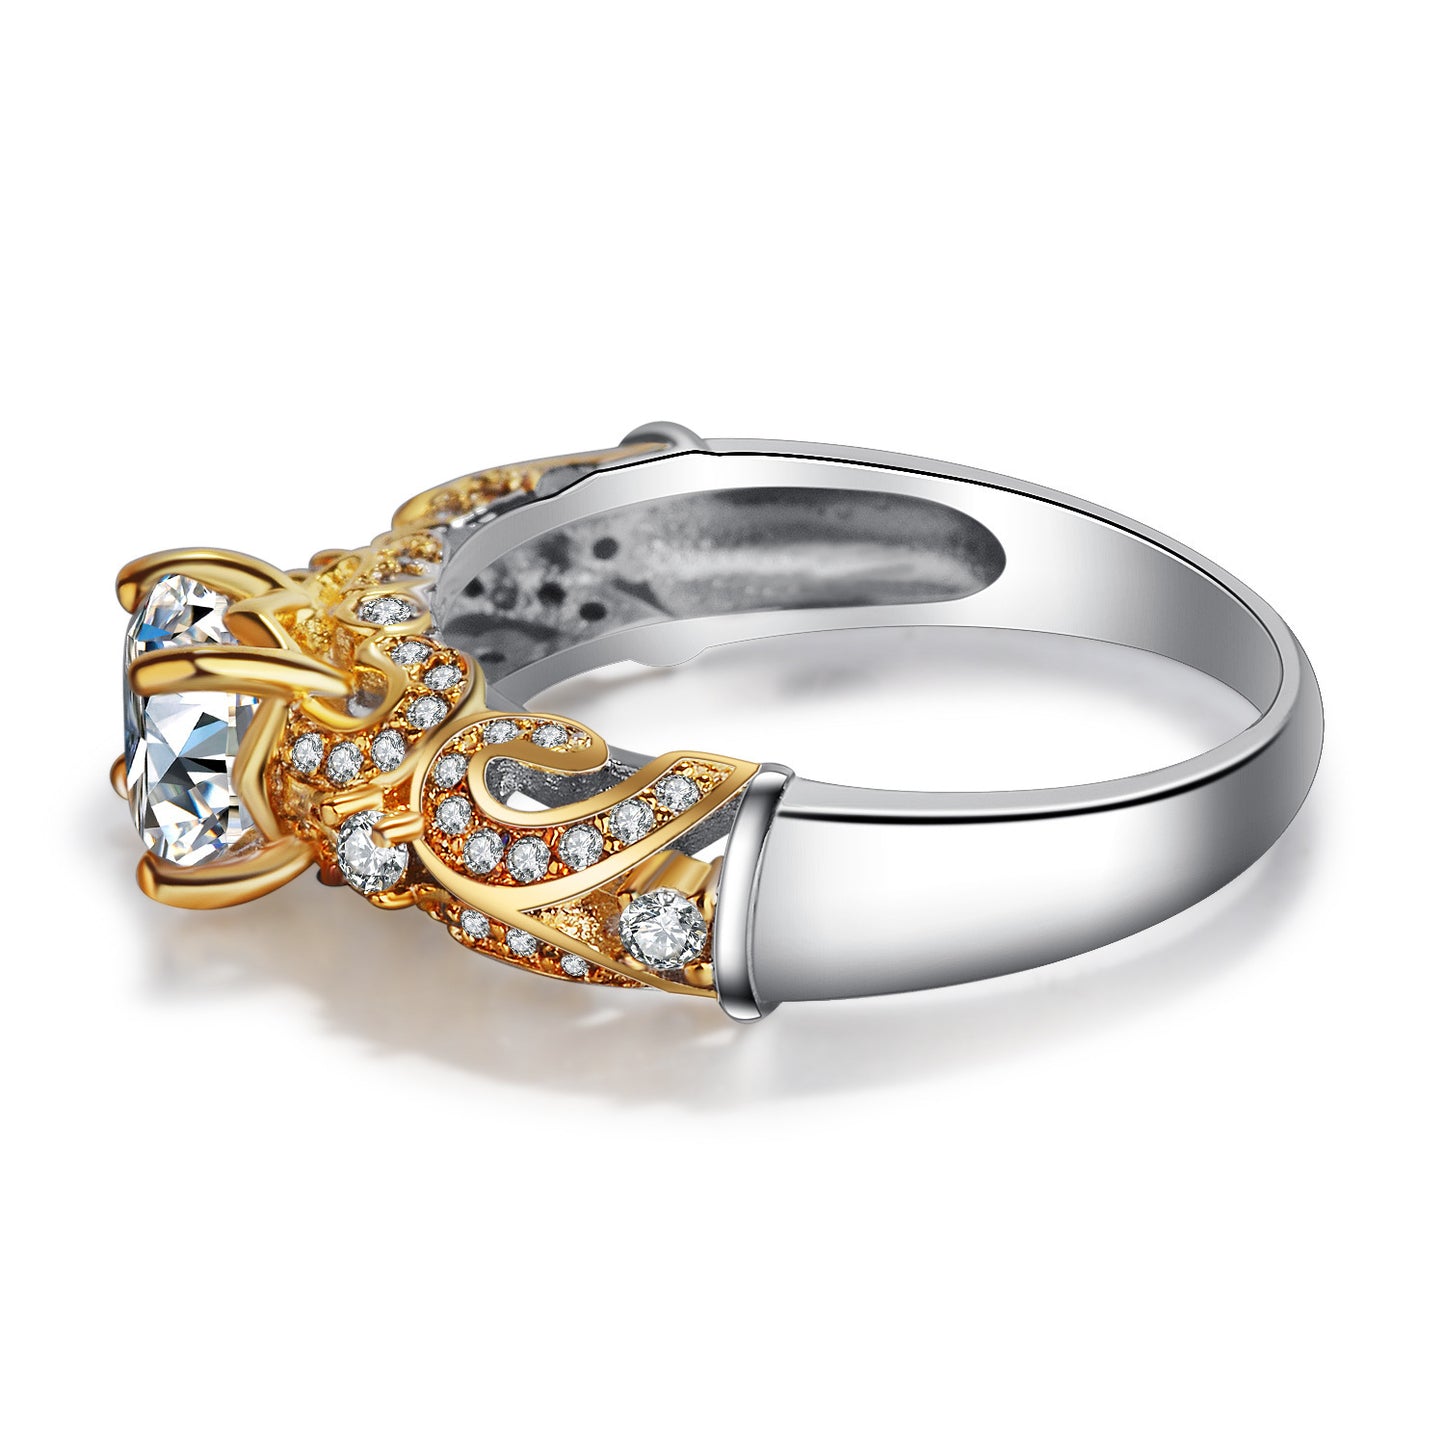 Four-claw inlay simulation diamond ring